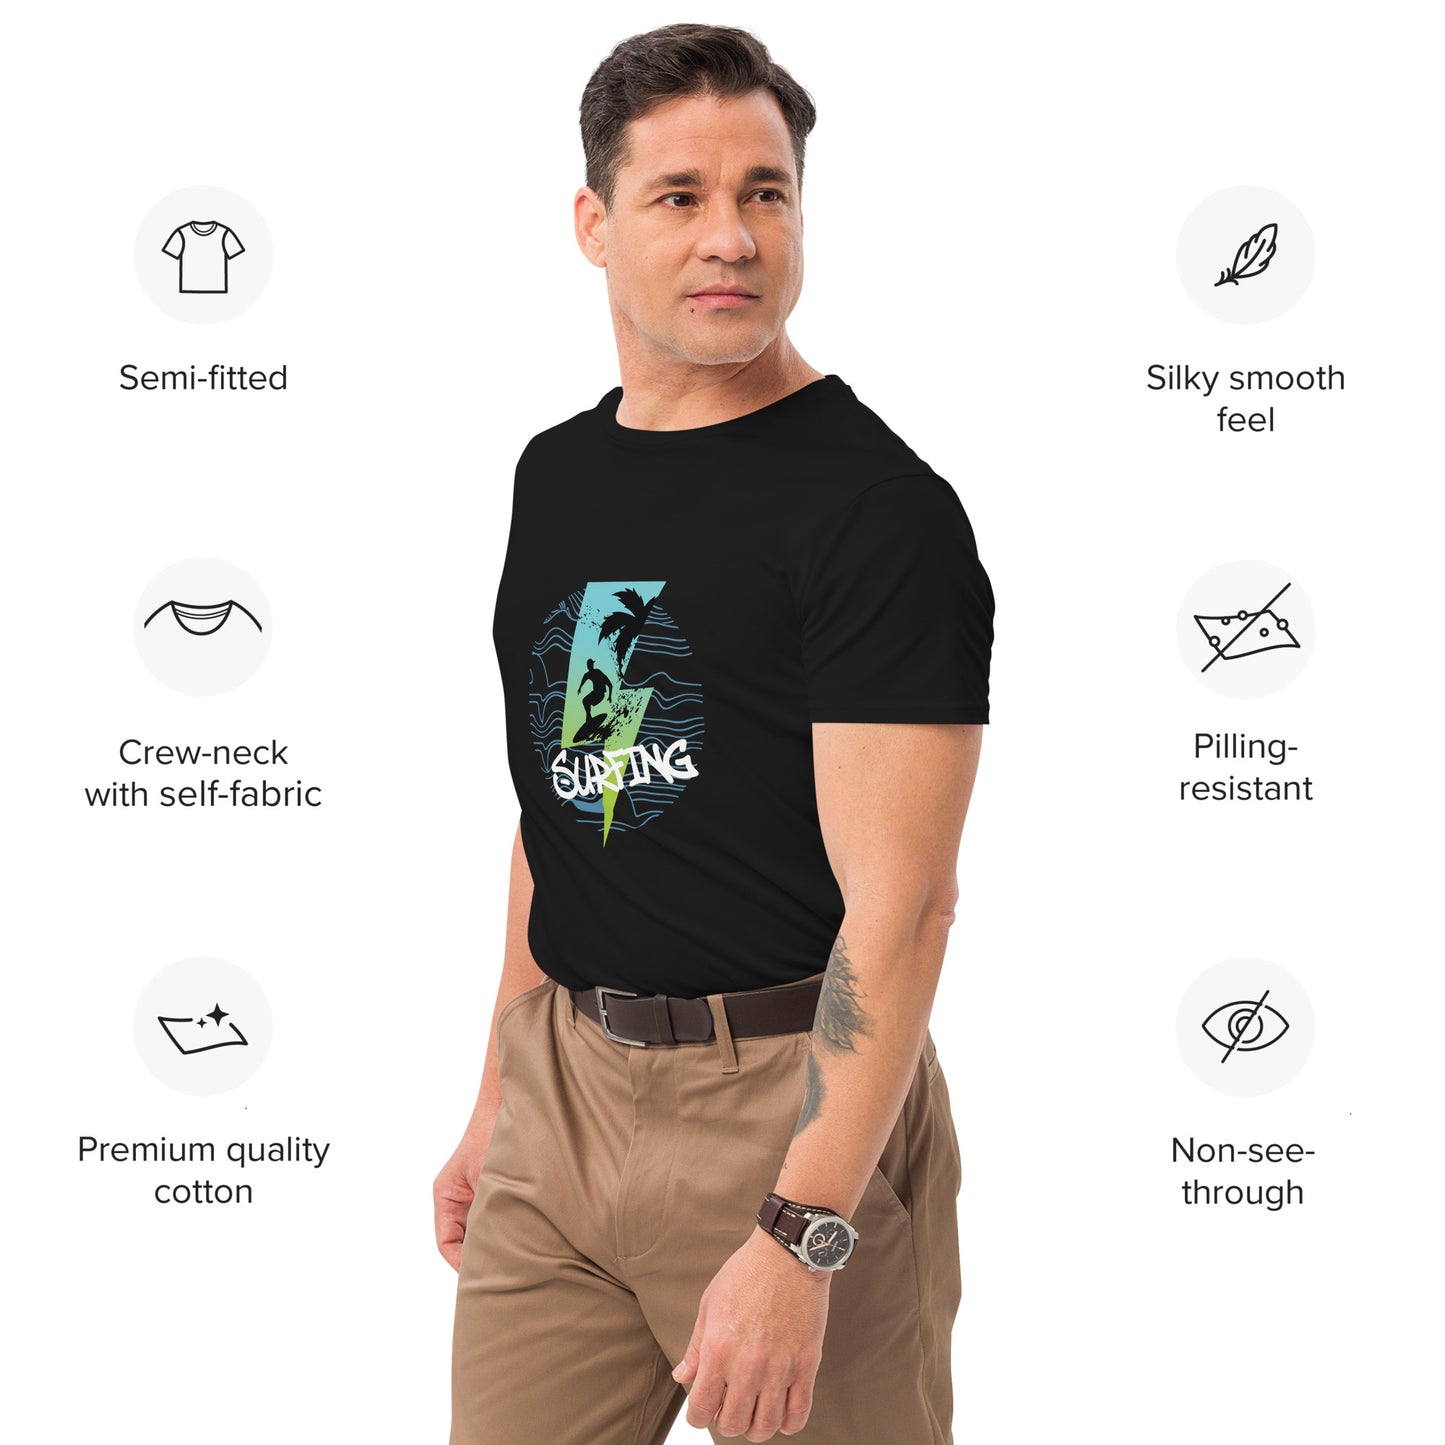 Surfing - Men's premium cotton t-shirt - HobbyMeFree